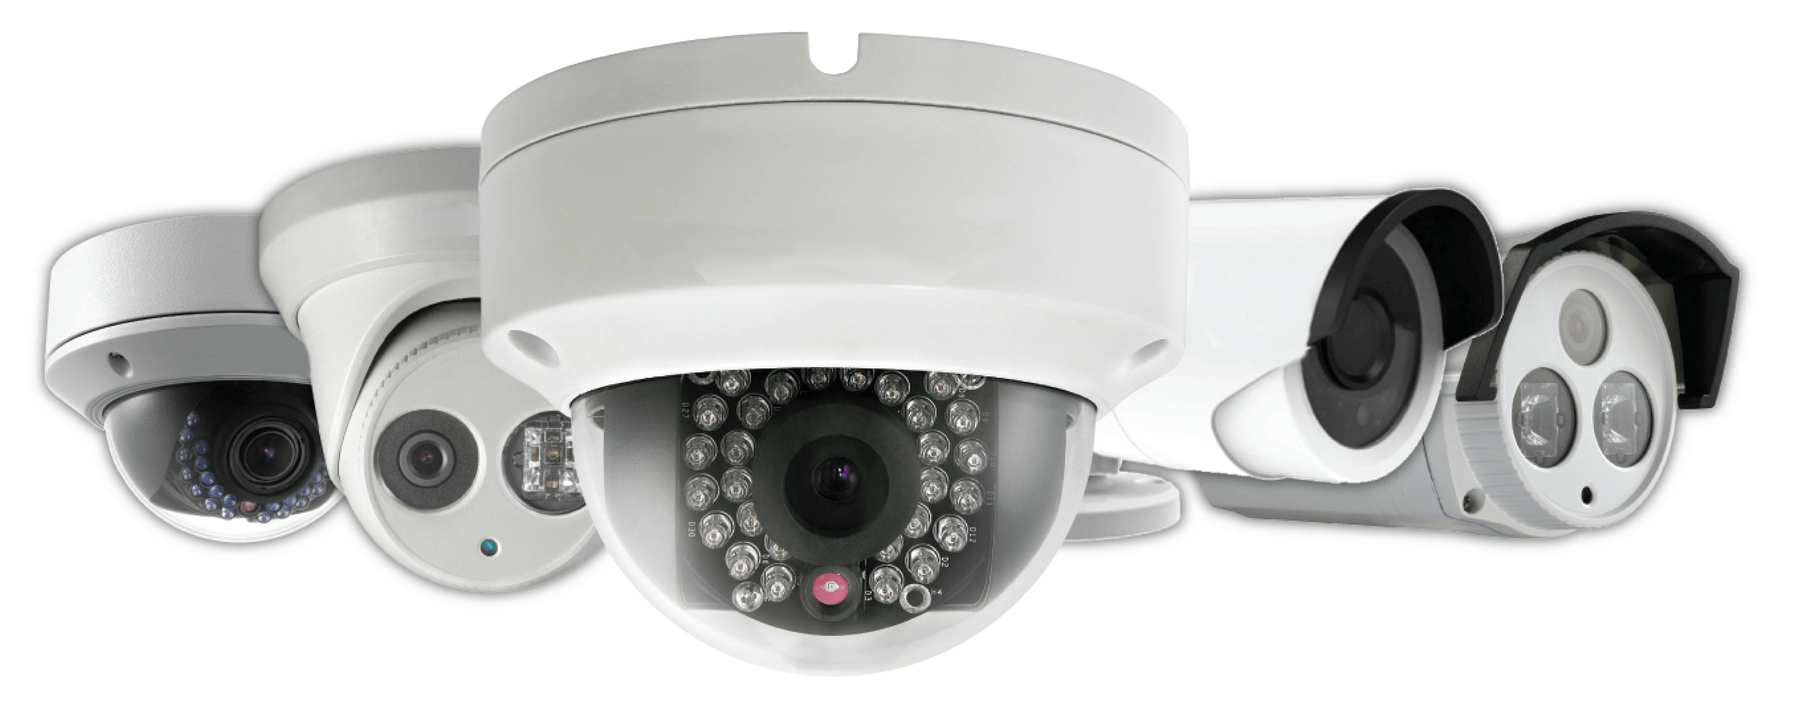 Right Security Camera, Video Surveillance, Greenville, South Carolina, Liquid Video Technologies